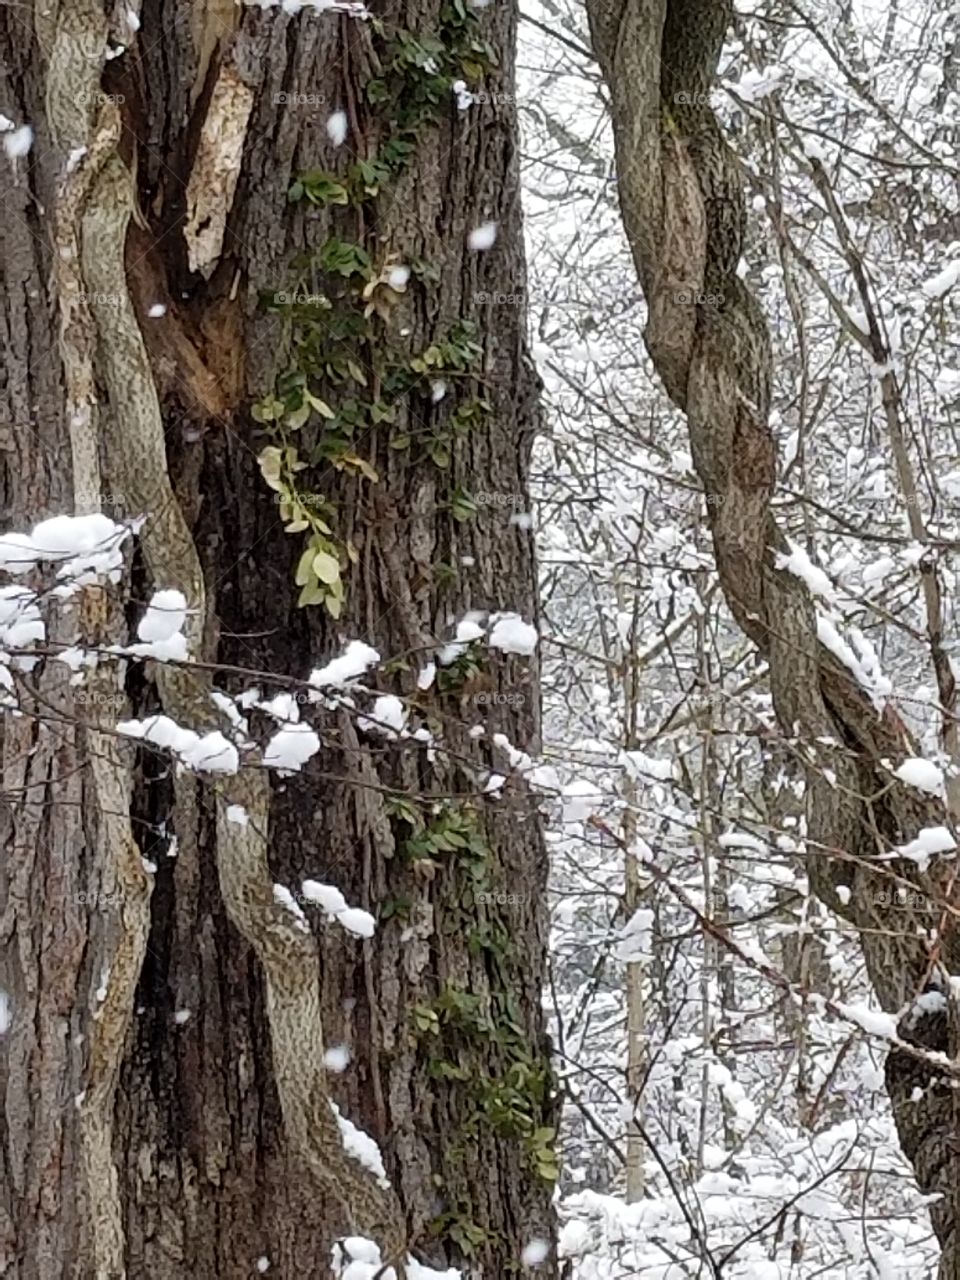 knarled tree and snow